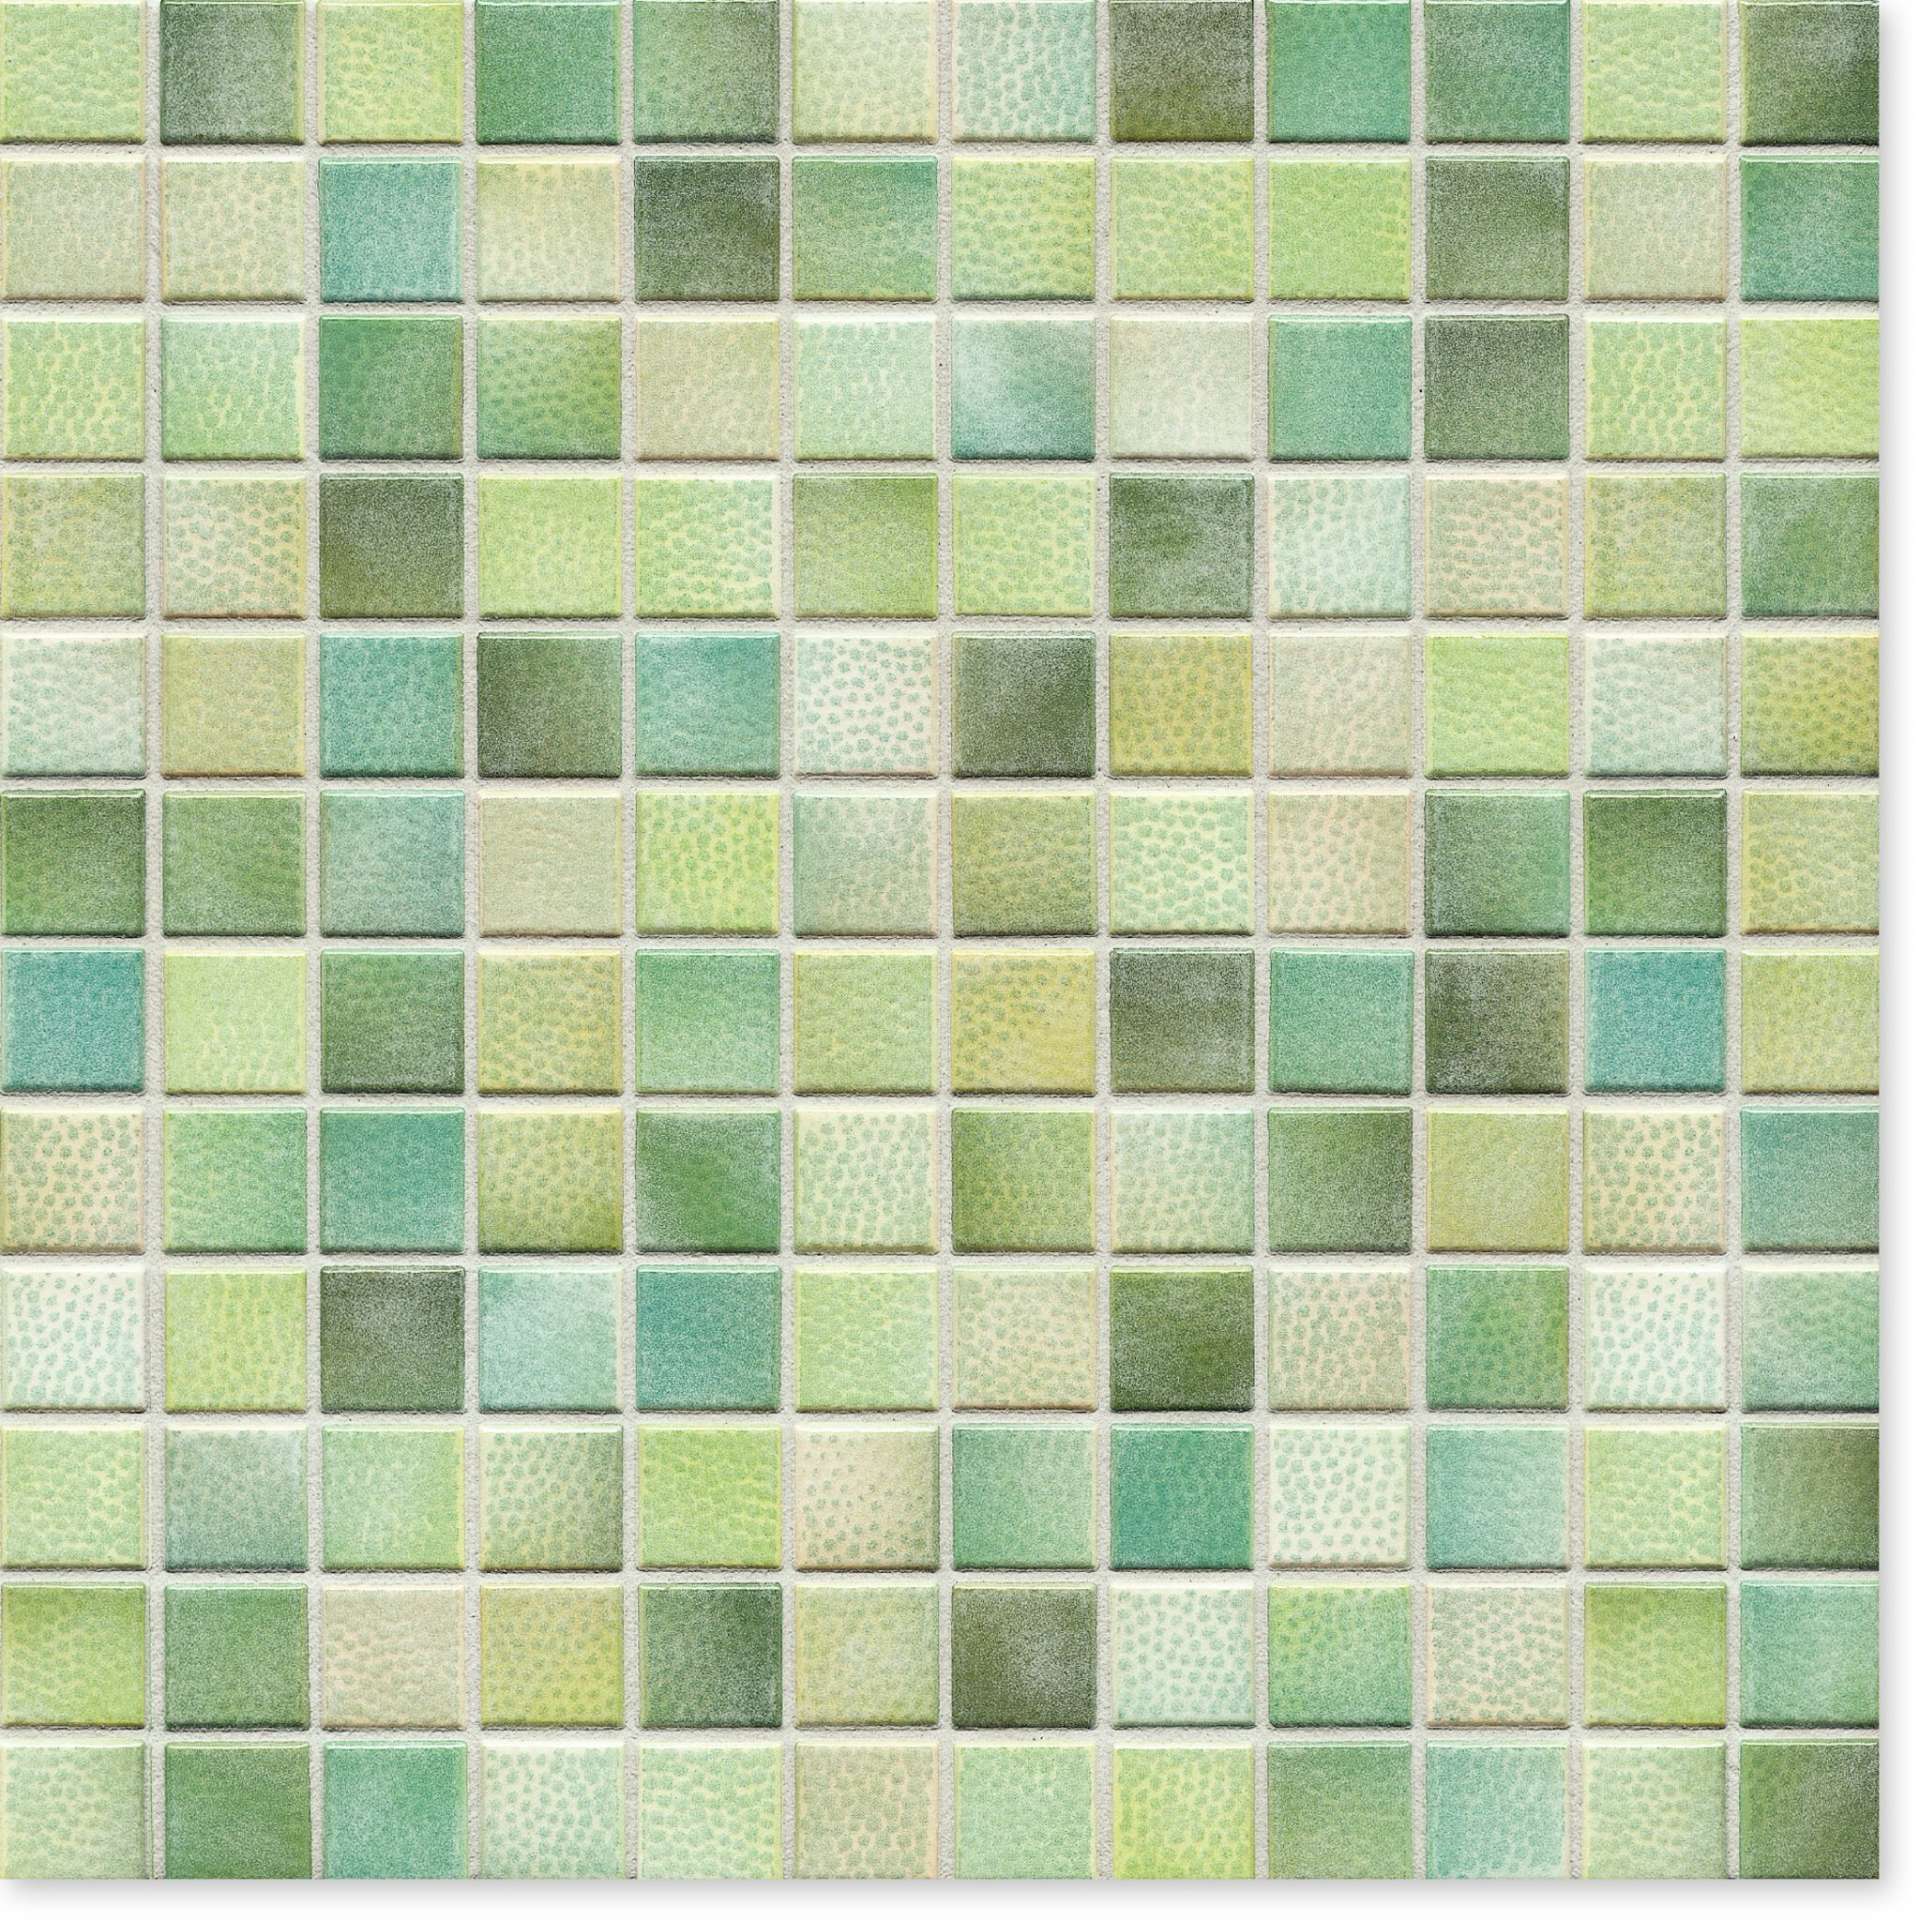 Мозаика Jasba Kauri Aquagr?n-Mix Glzd 8724H-44, цвет зелёный, поверхность глянцевая, квадрат, 316x316